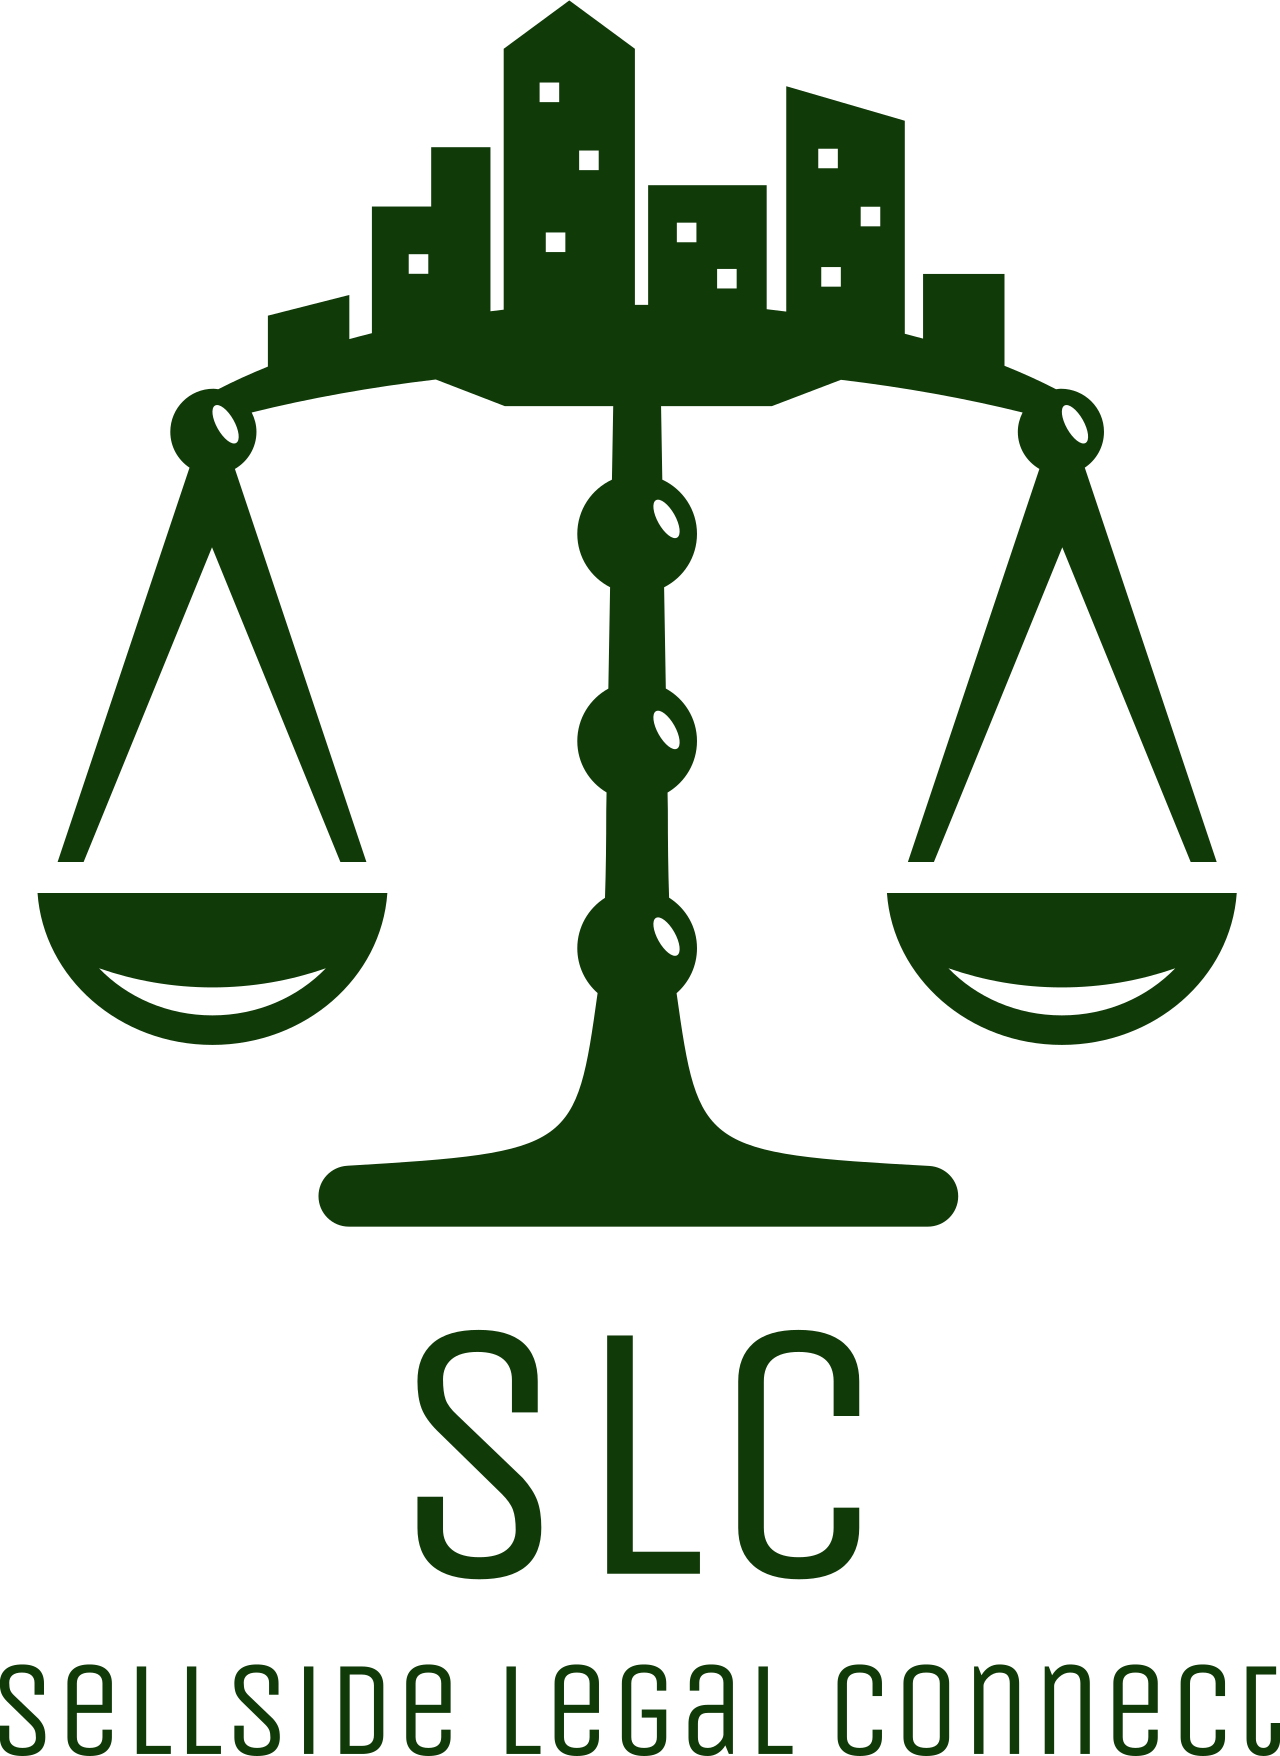 Sellside Legal Connect's logo